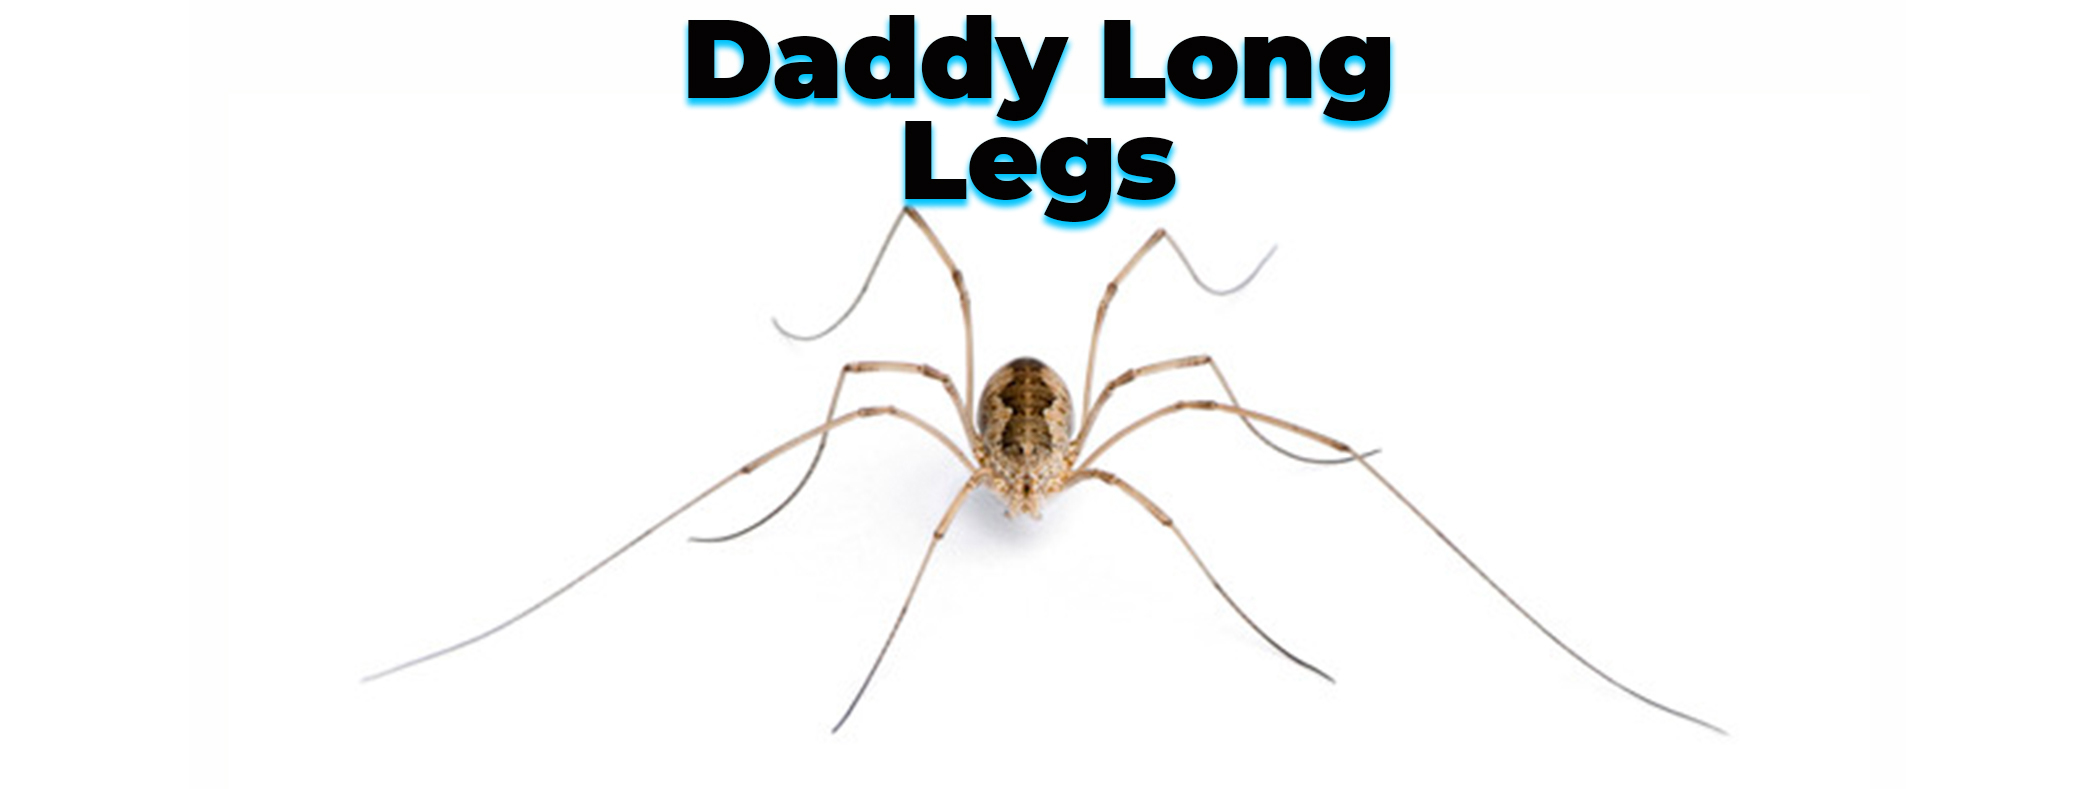 Daddy long legs – harmful or harmless?